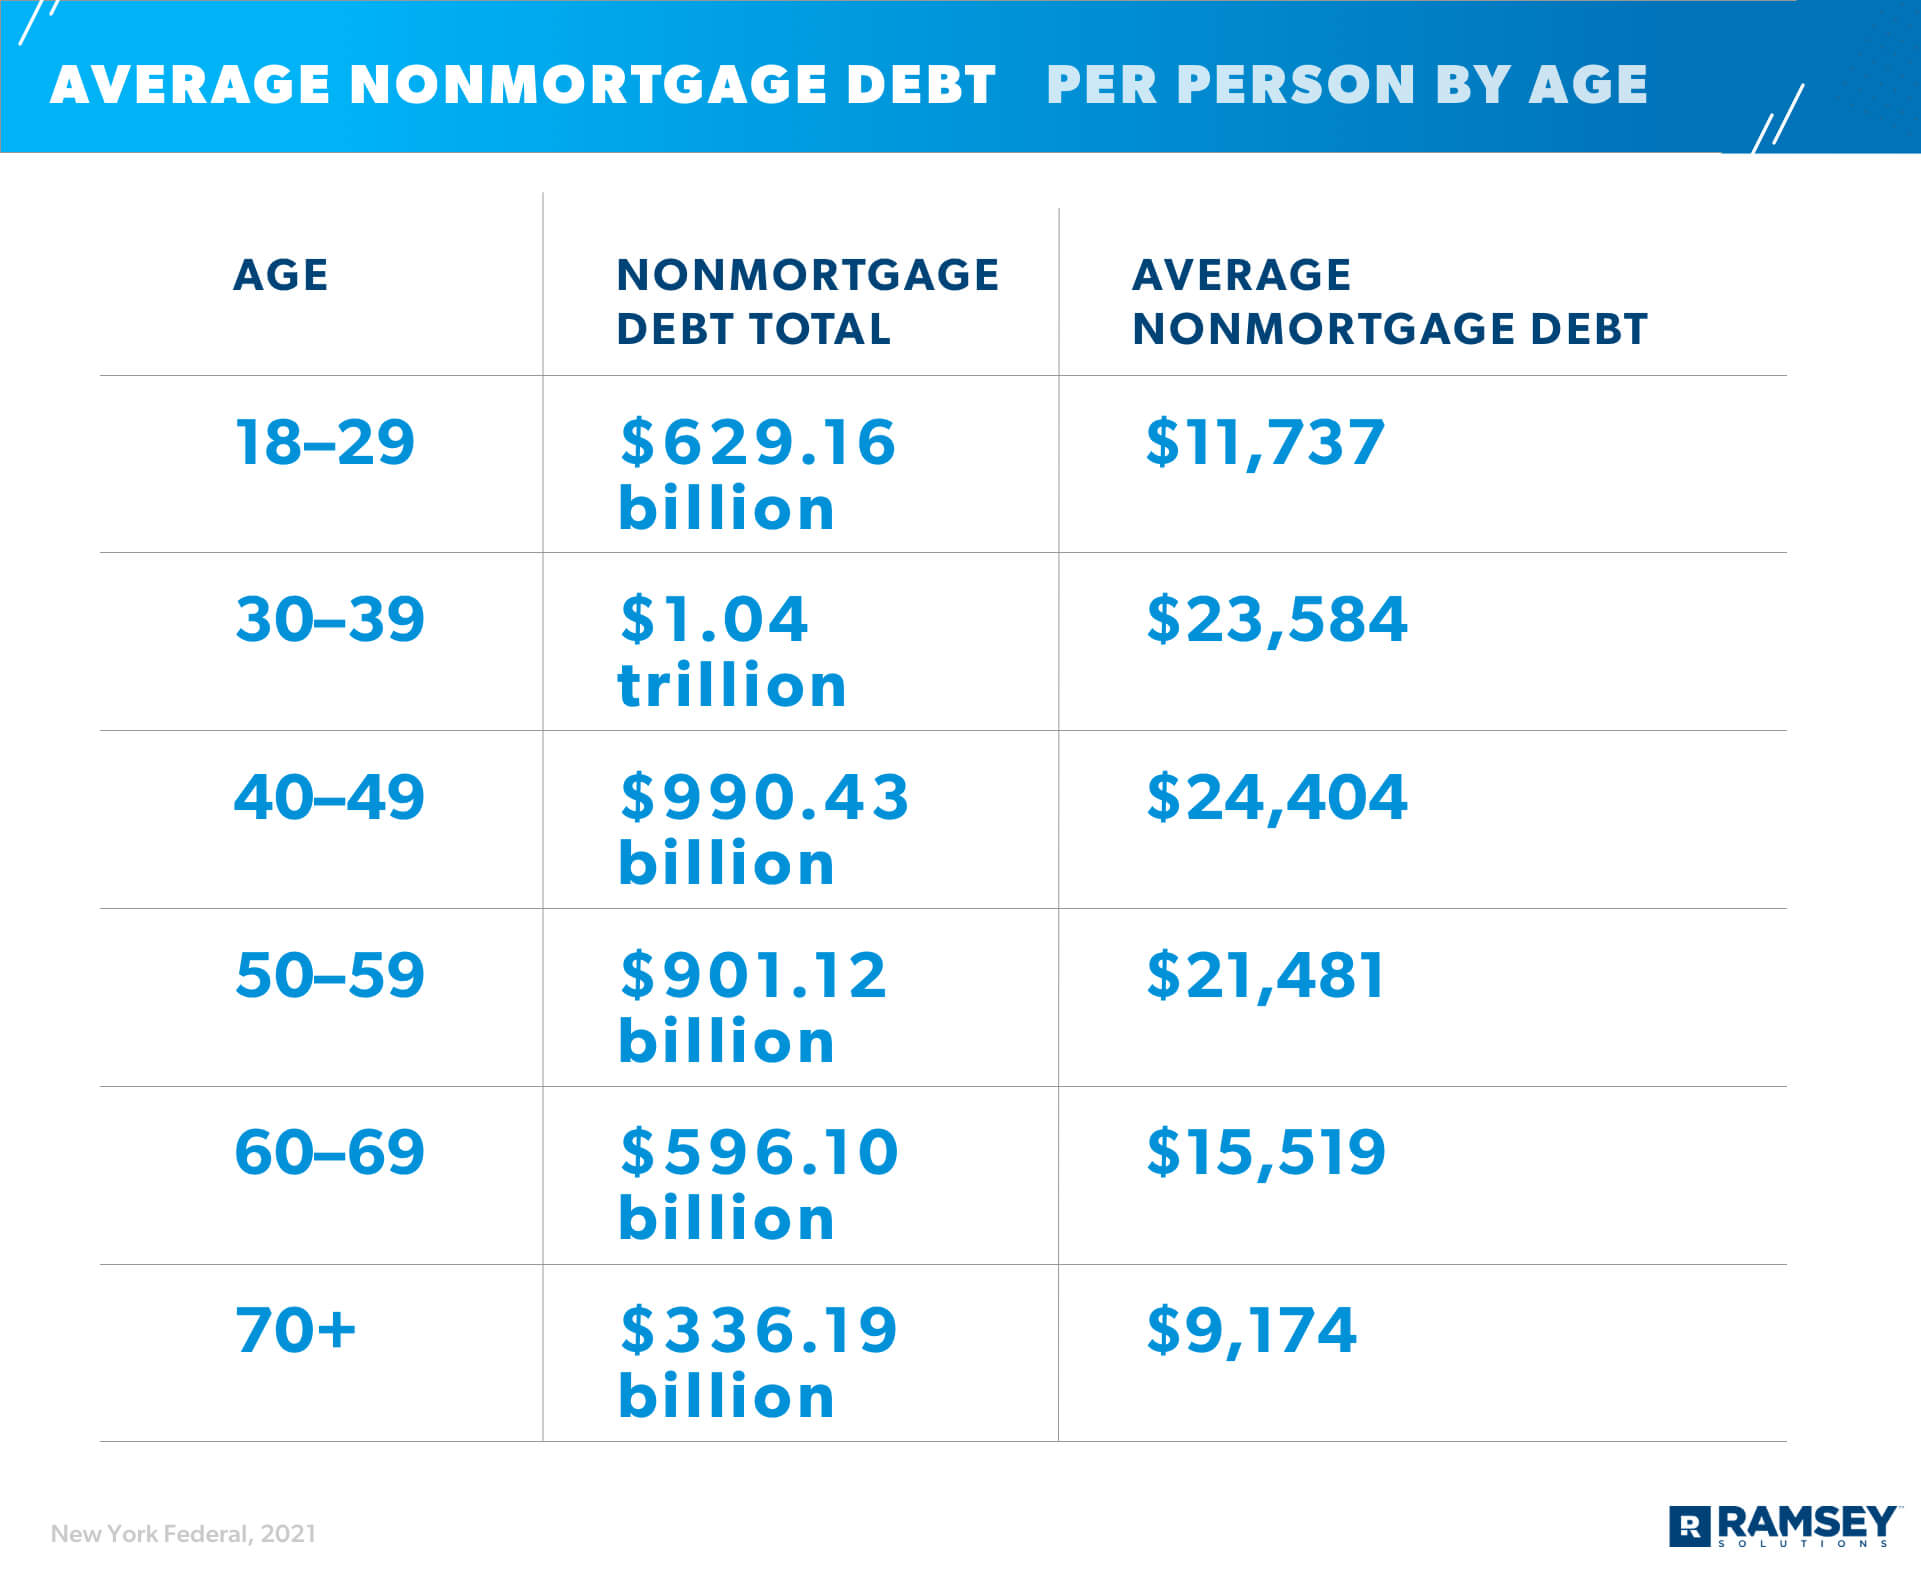 Average American Debt